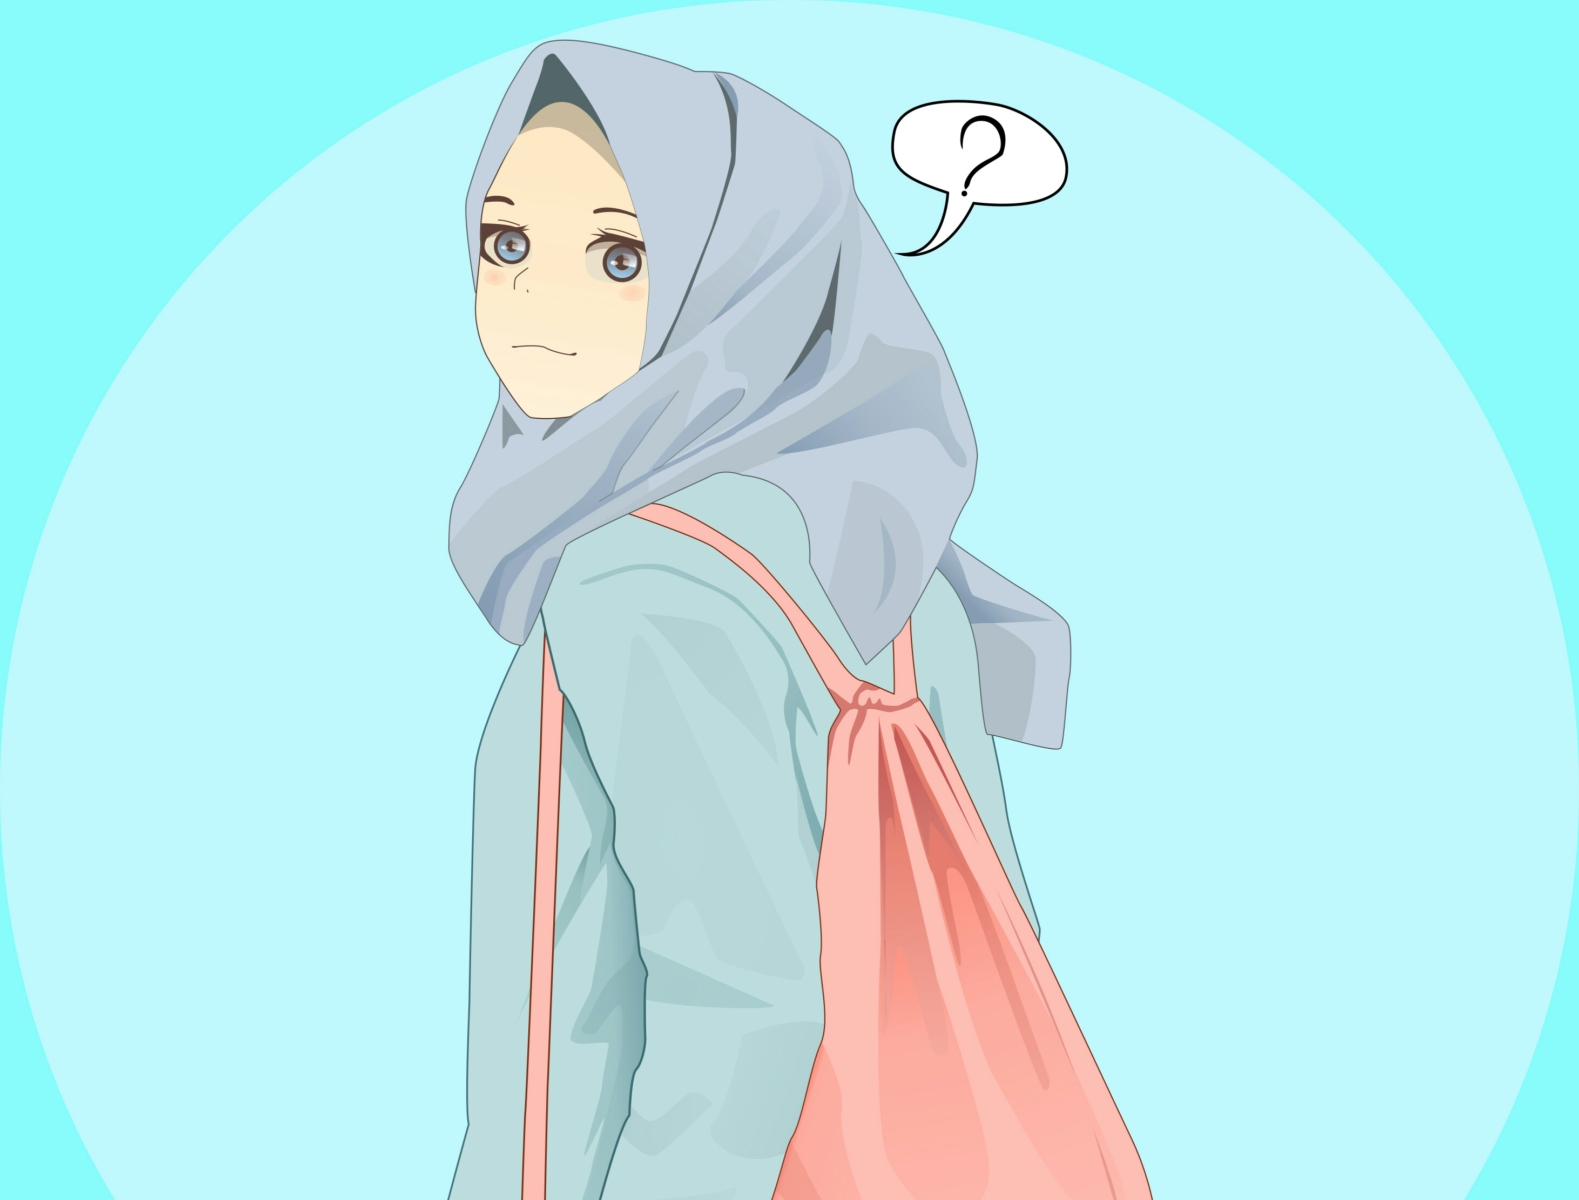 Anime Style - Muslim Girl by Septio Nugroho on Dribbble